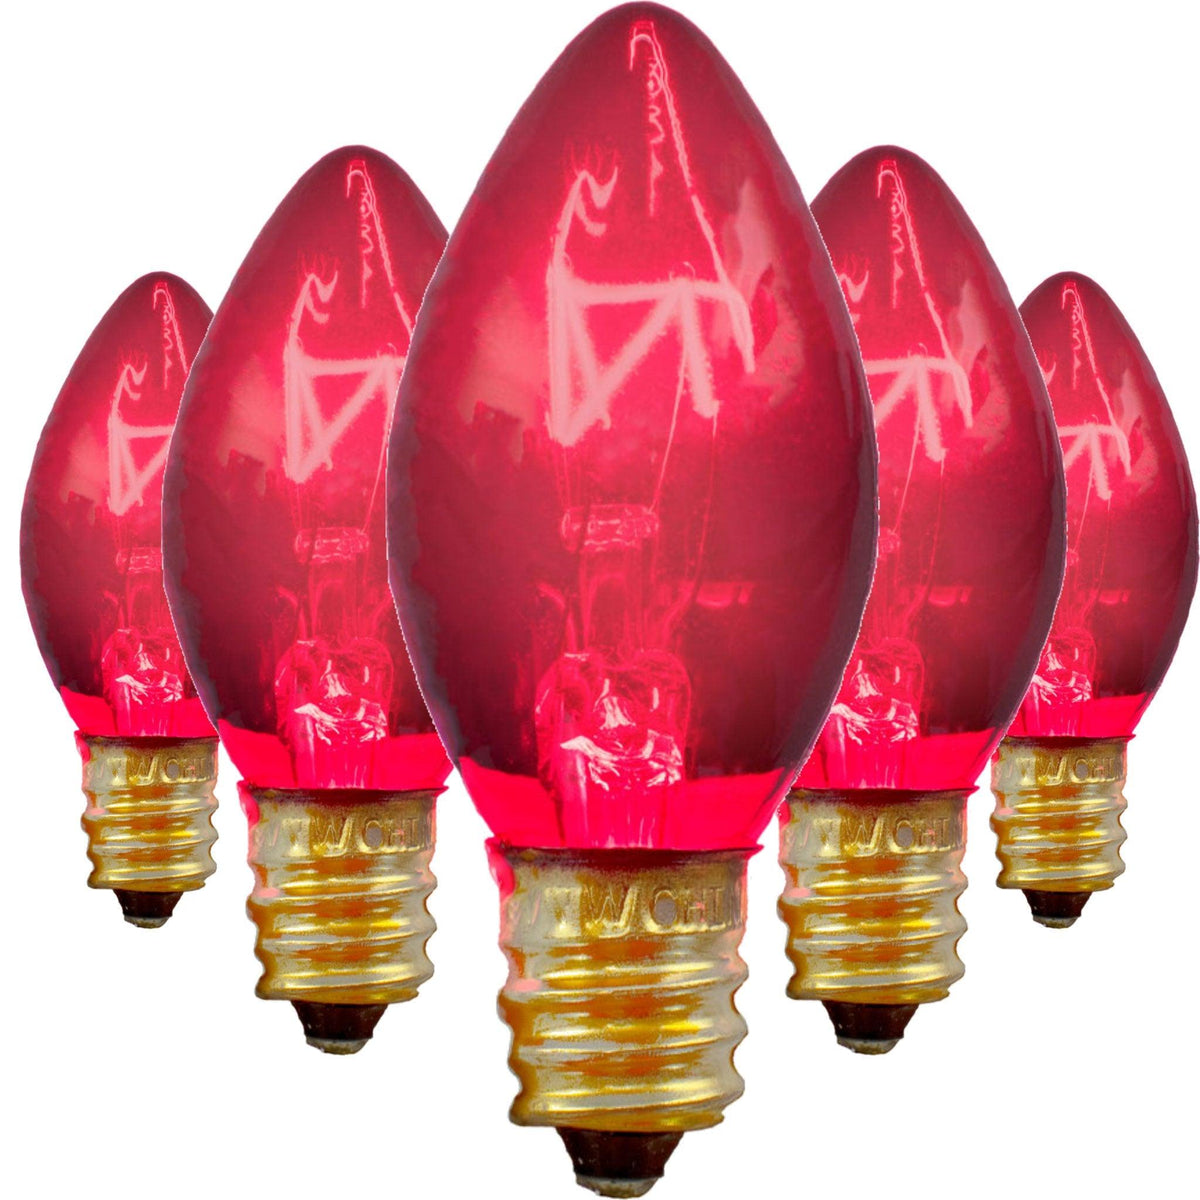 25FT Pink Magnetic Outdoor String Lighting Set on sale at leedisplay.com